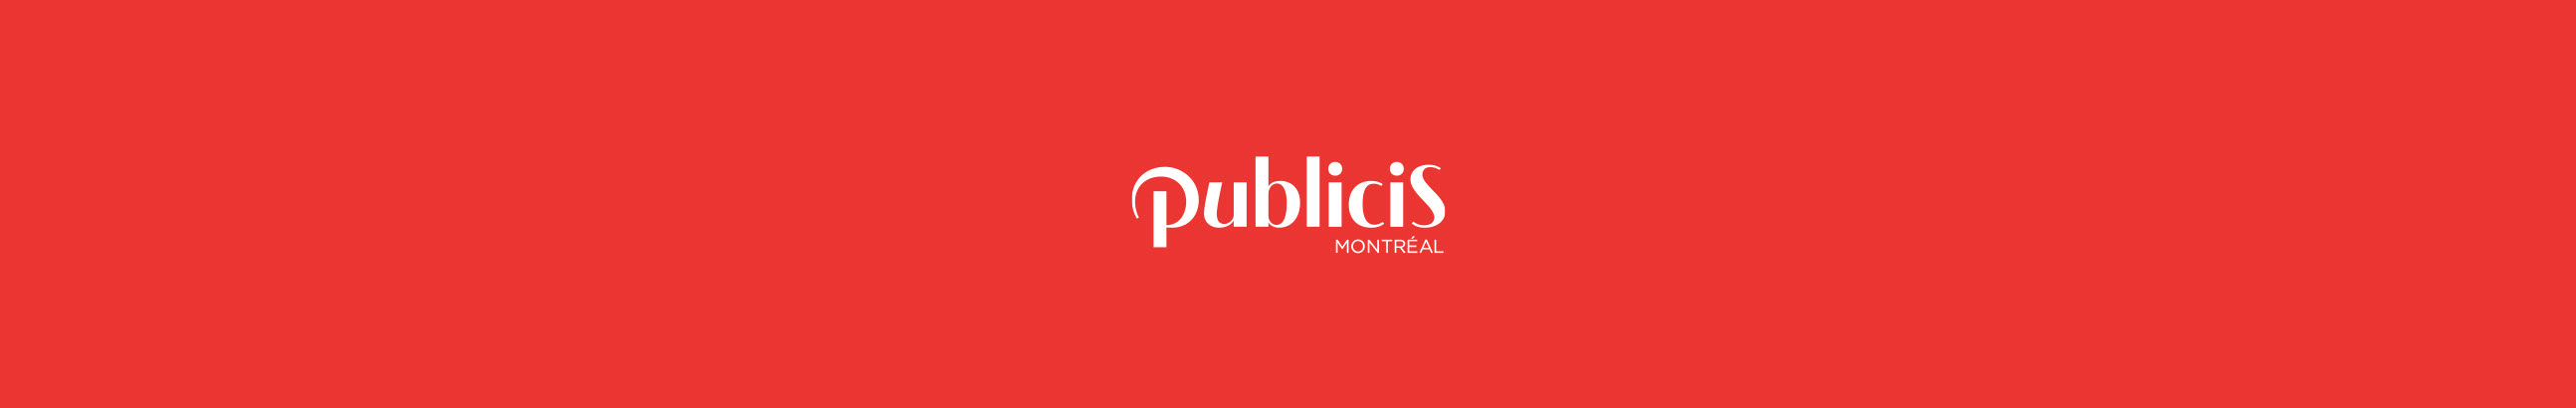 Publicis Montreal's profile banner